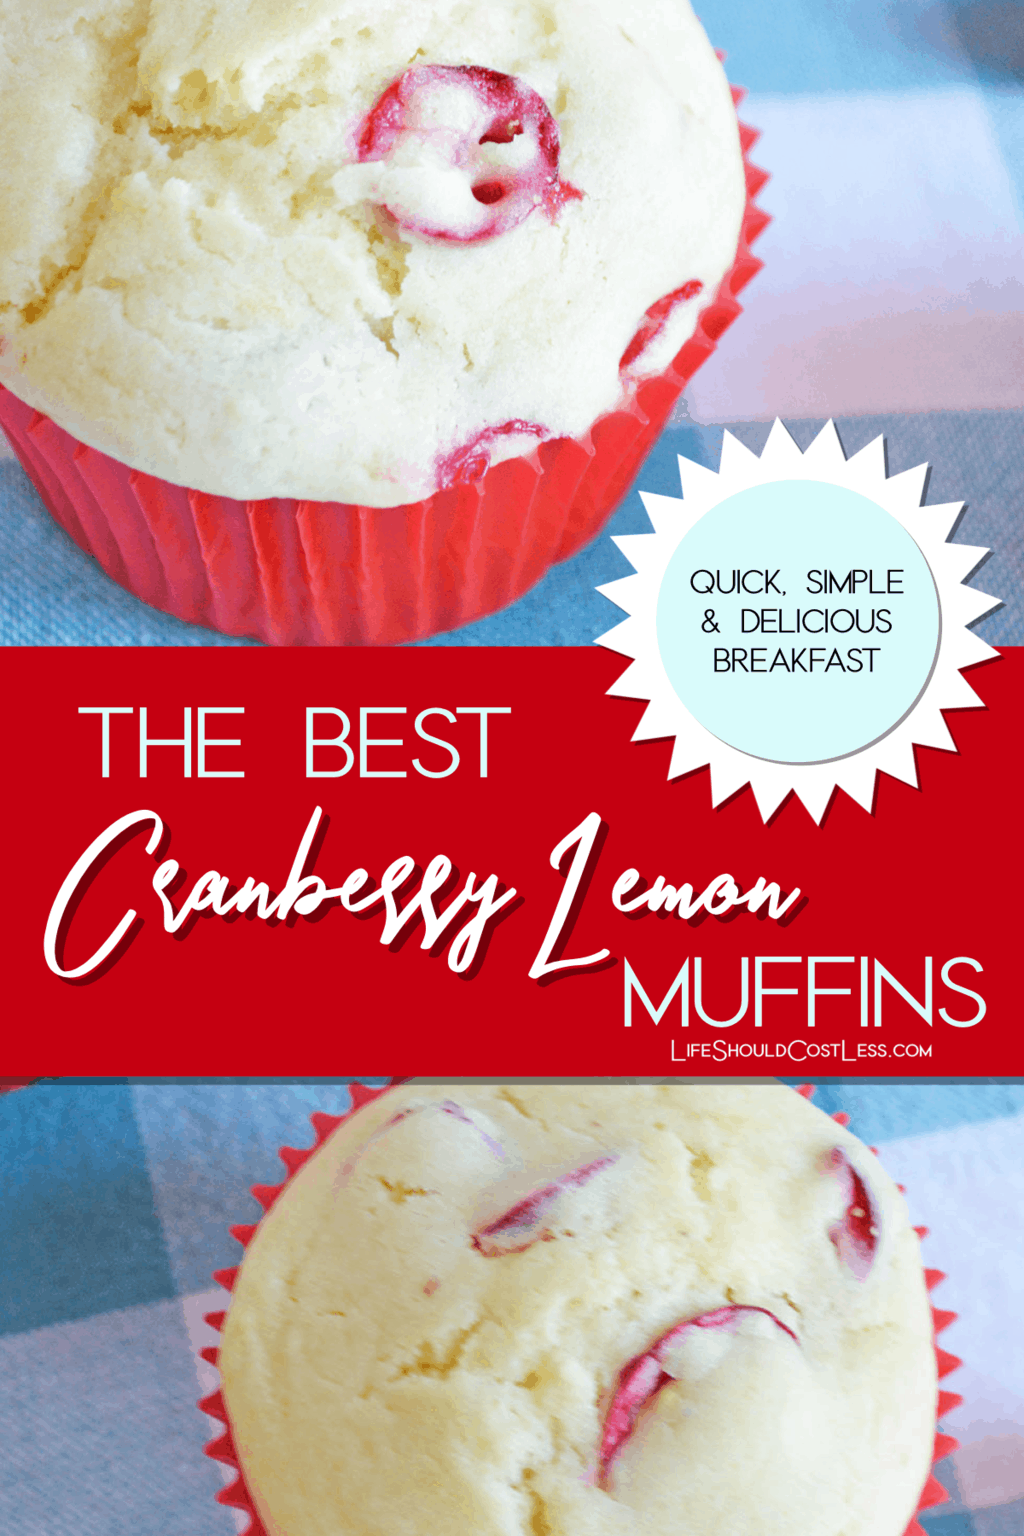 The Best Cranberry Lemon Muffins Breakfast Muffins lifeshouldcostless.com